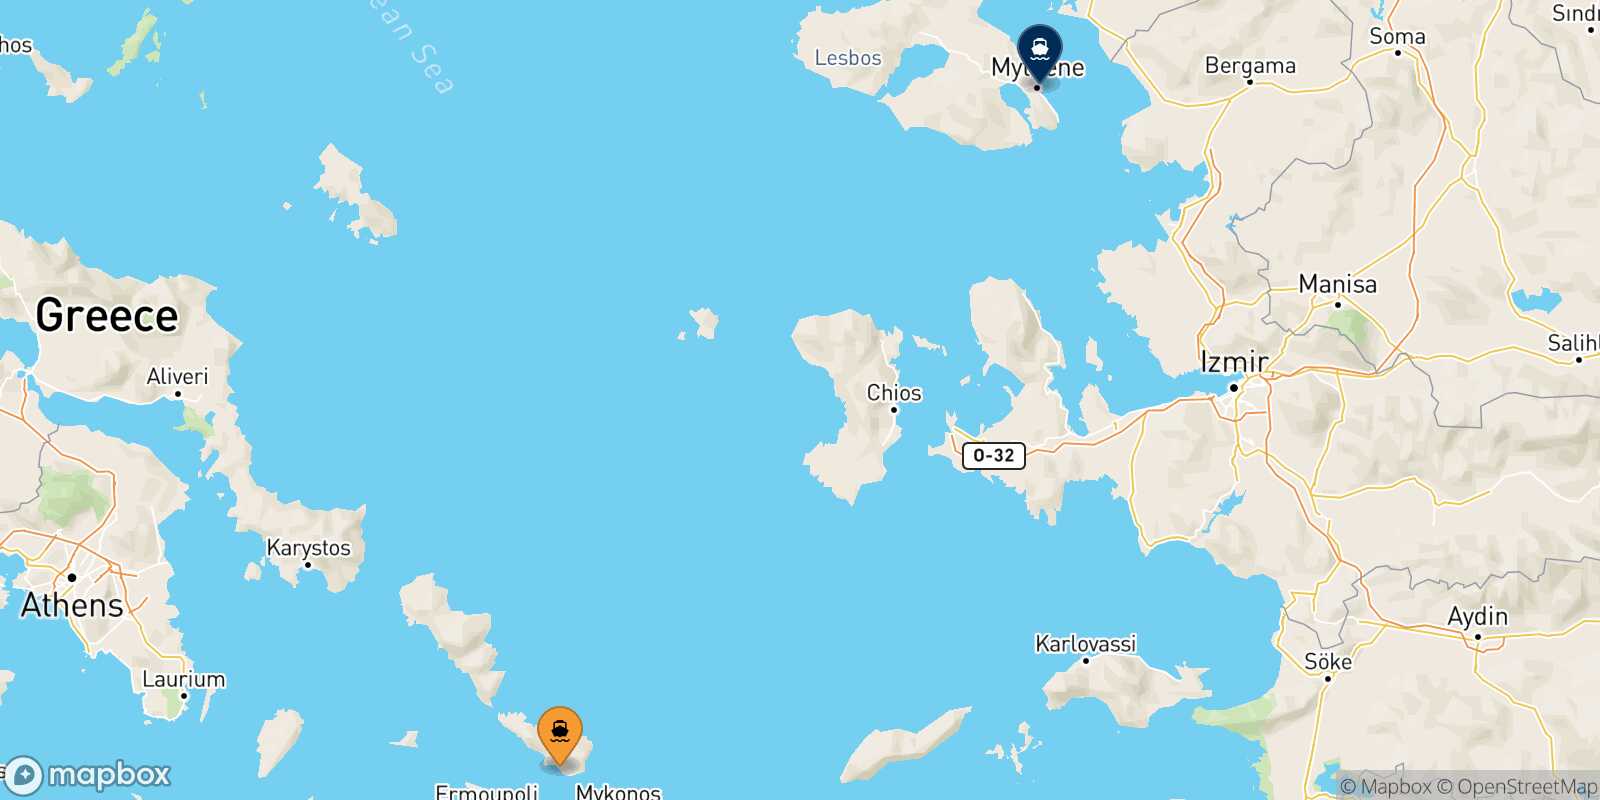 Tinos Mytilene (Lesvos) route map